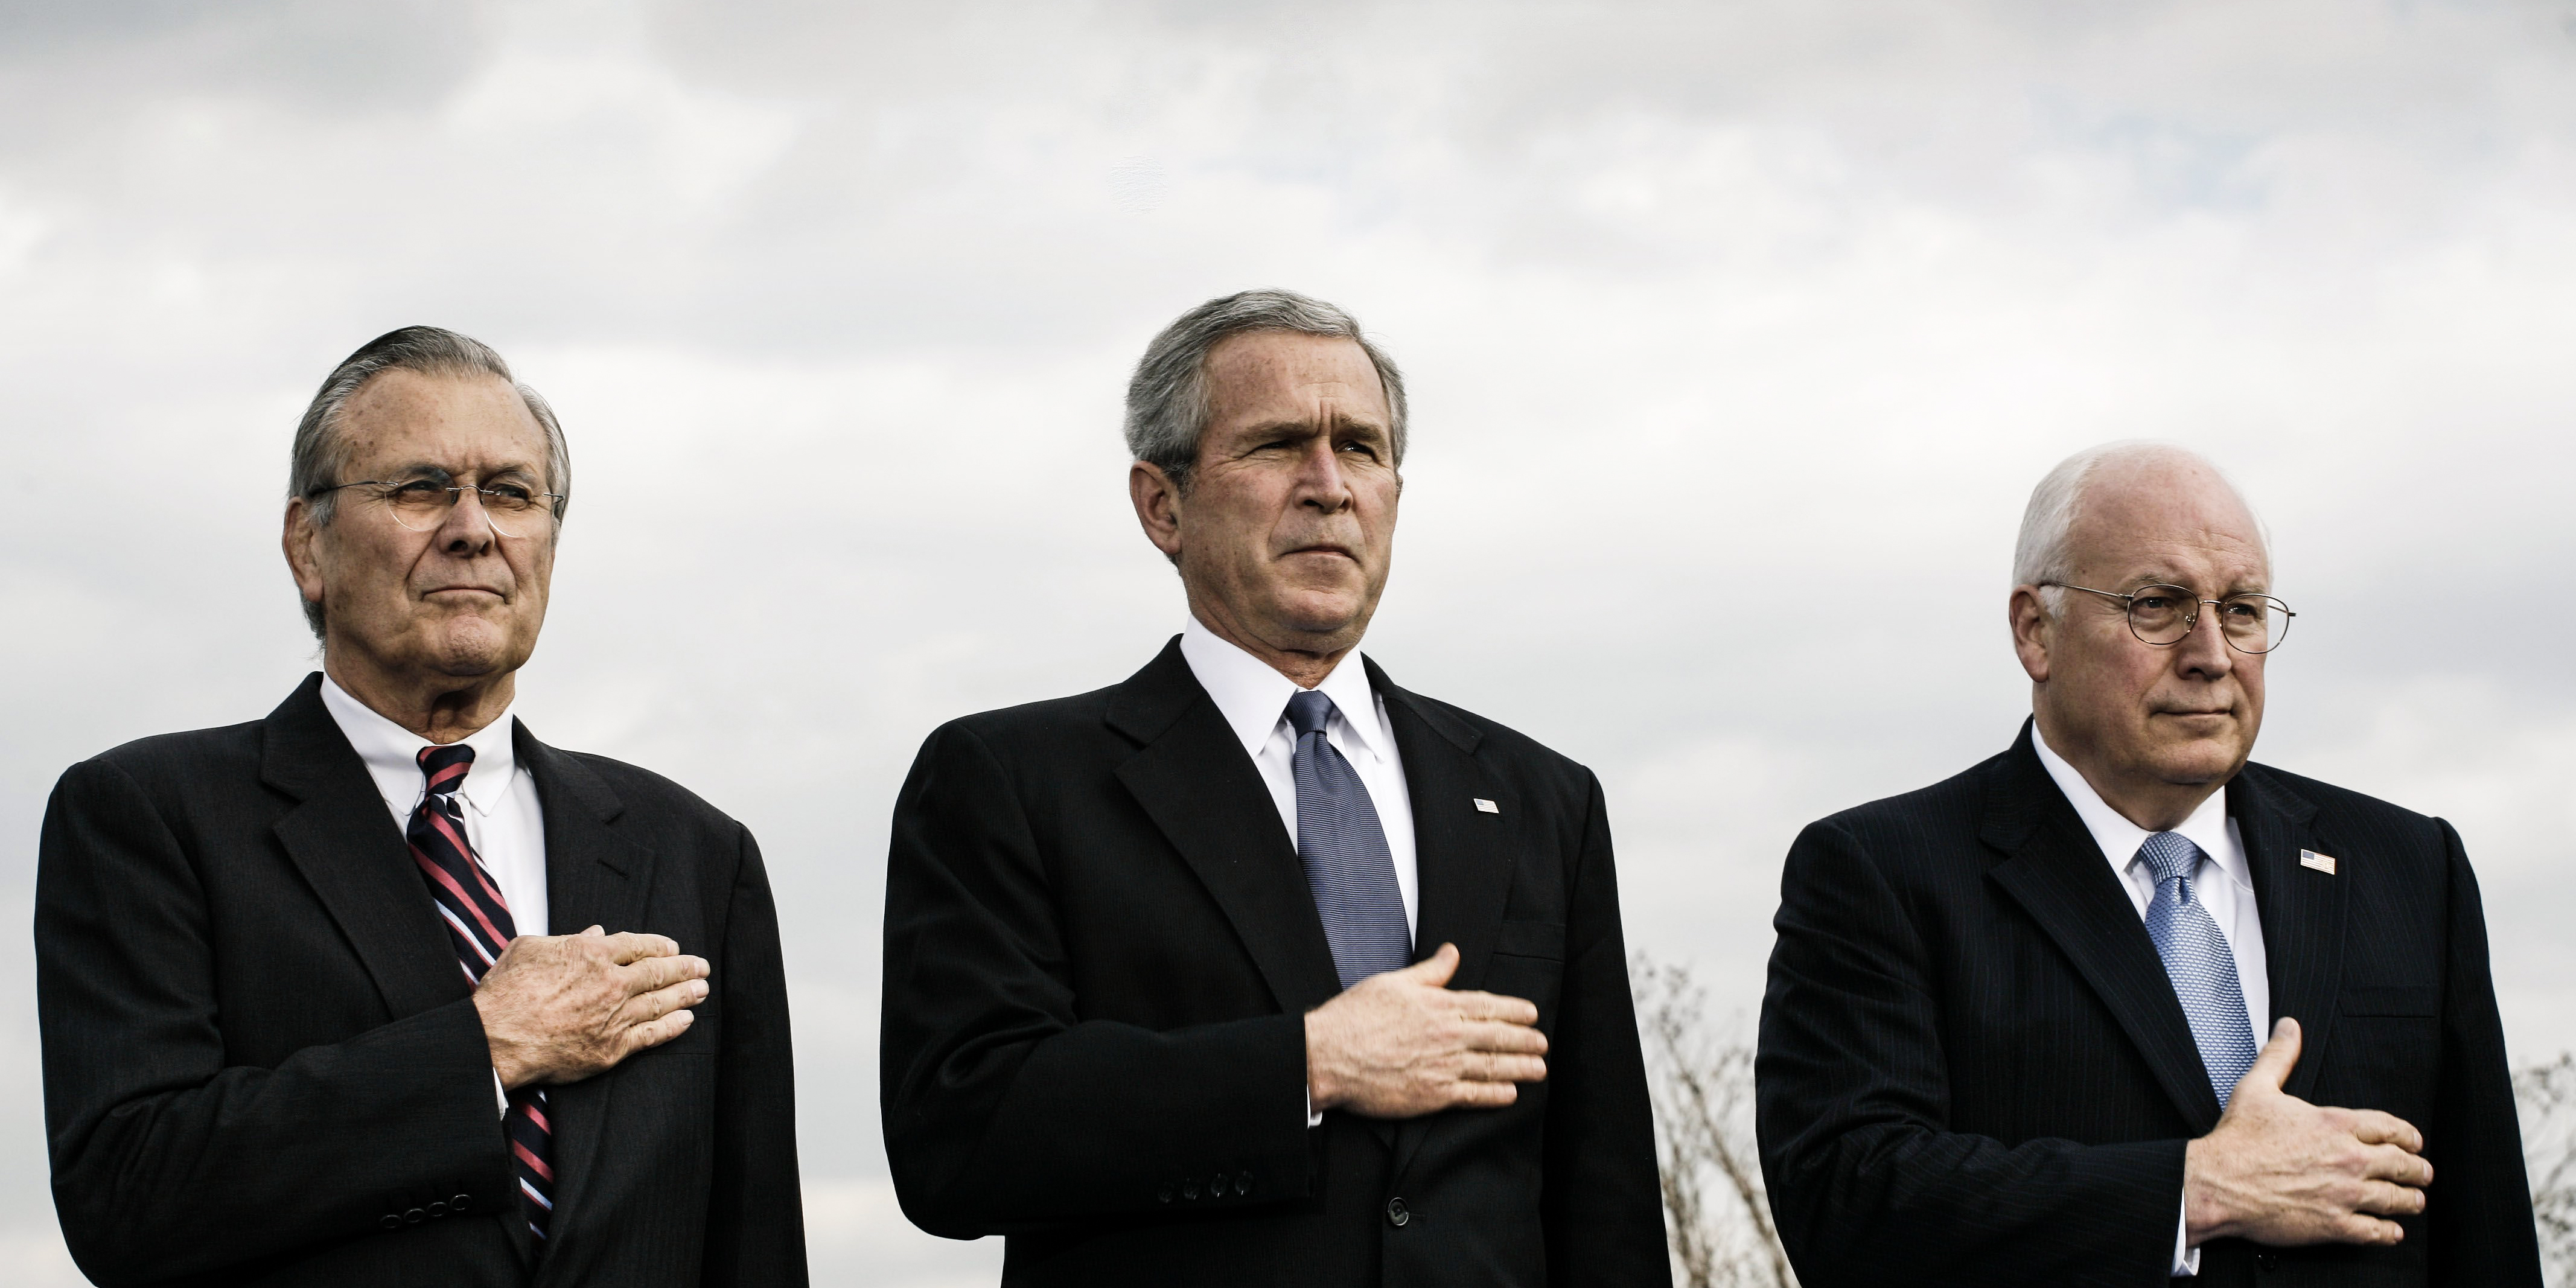 U.S. Secretary of Defense Donald Rumsfeld, President George W. Bush, Vice President Dick Cheney at the Pentagon in Arlington, Va., on Dec. 15, 2006.Photo: Charles Ommanney/Getty Images